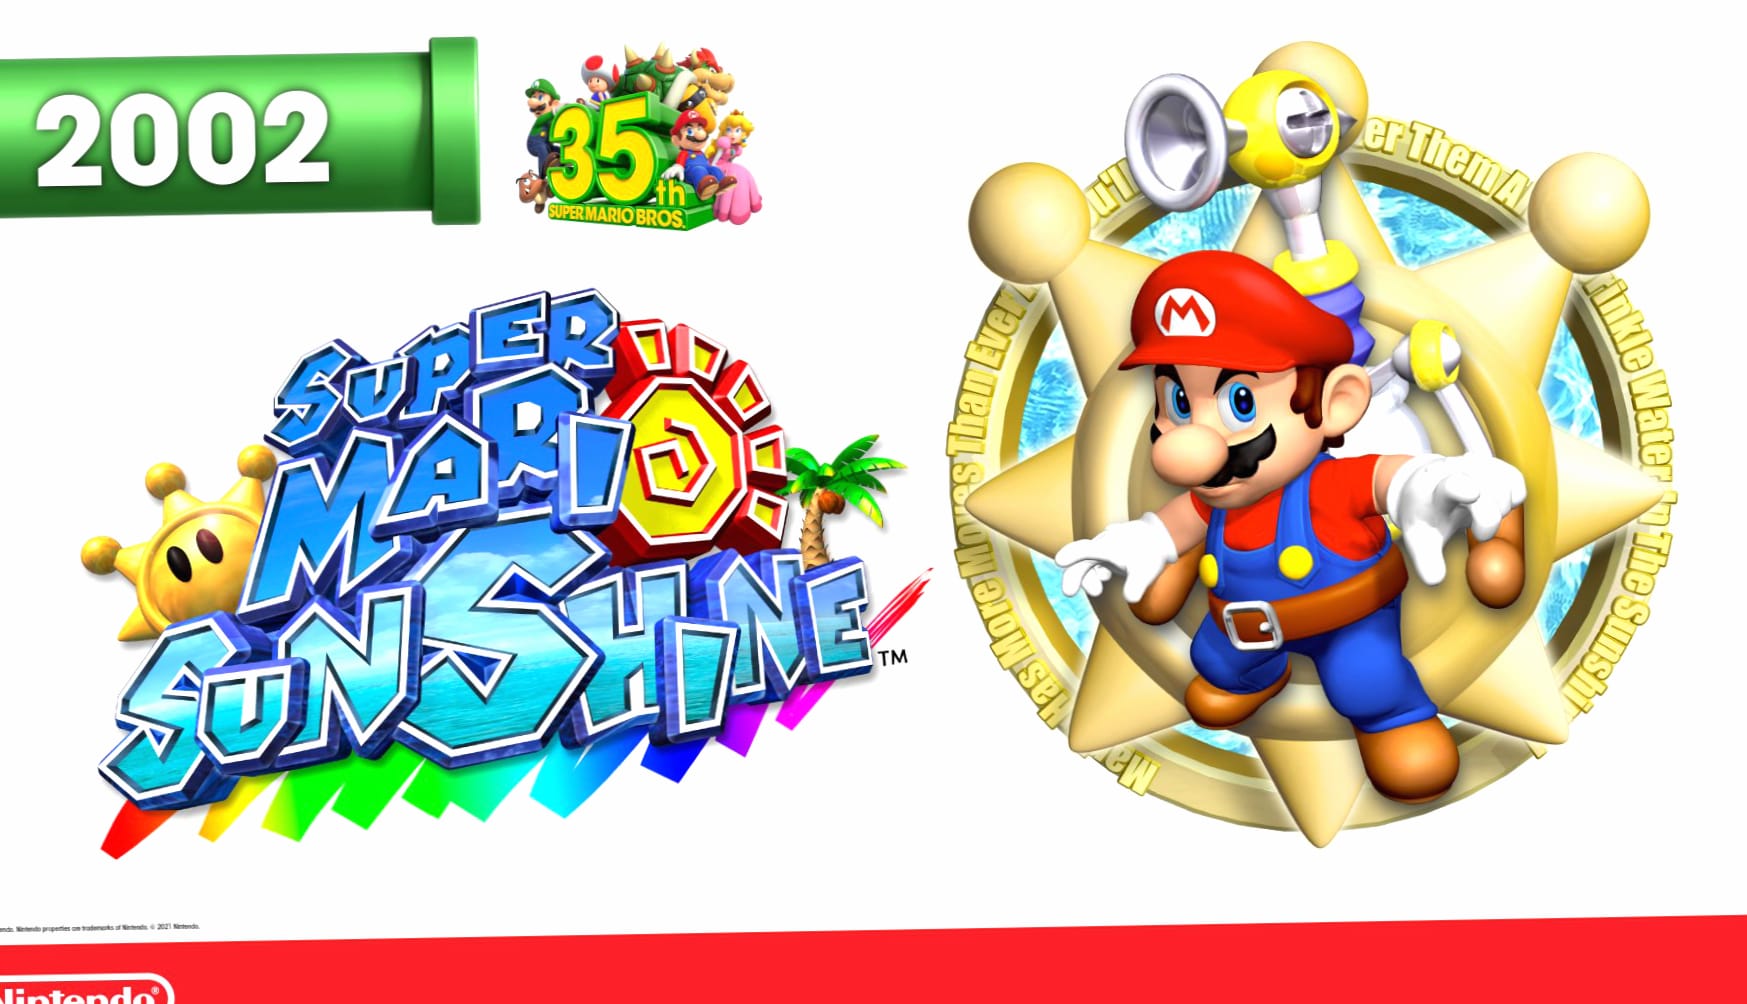 Super Mario Sunshine 2048 x 2048 iPad wallpaper download